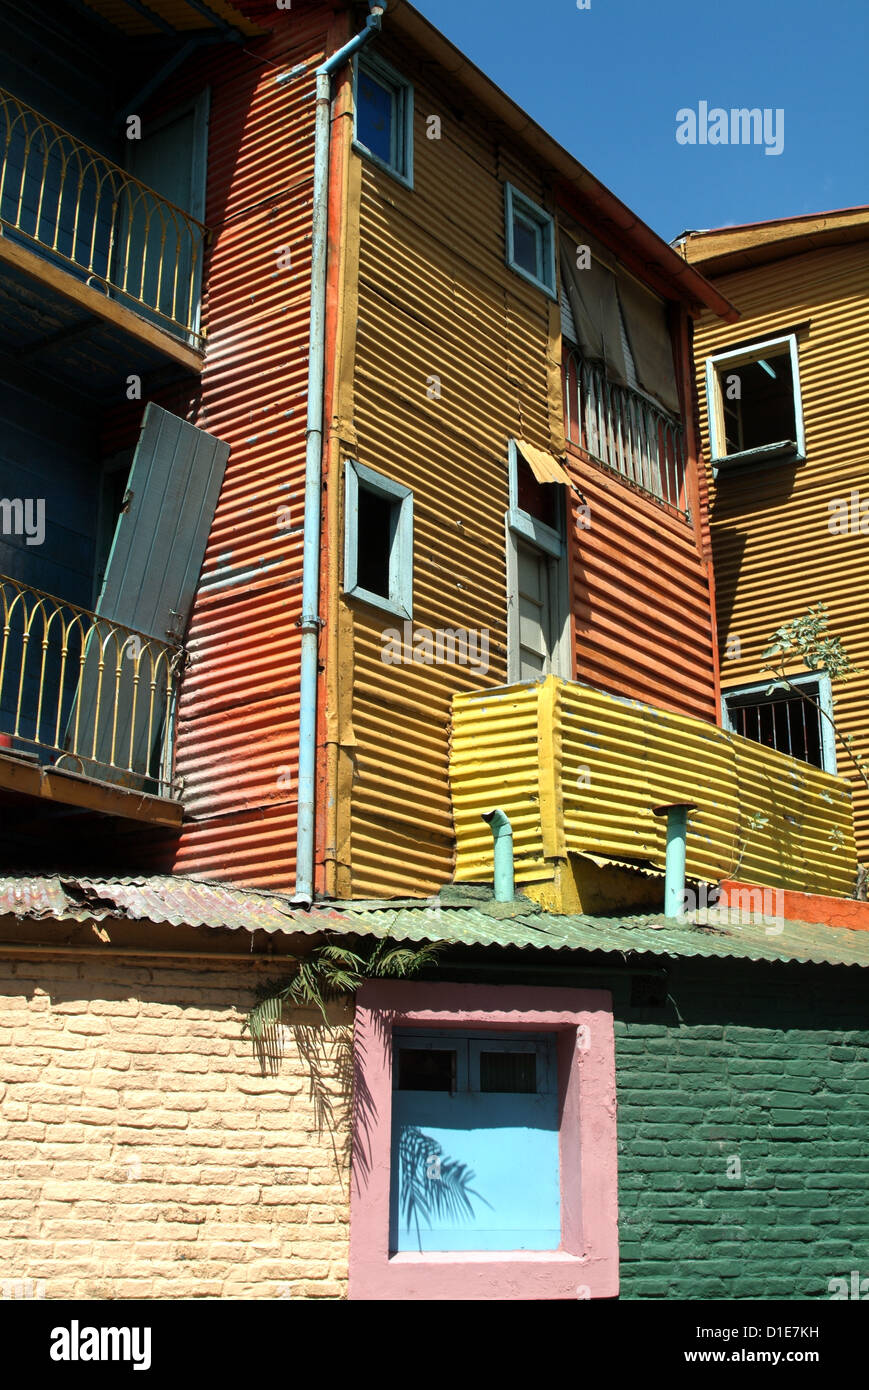 Caminito (kleine Straße), La Boca, Buenos Aires, Argentinien, Südamerika Stockfoto